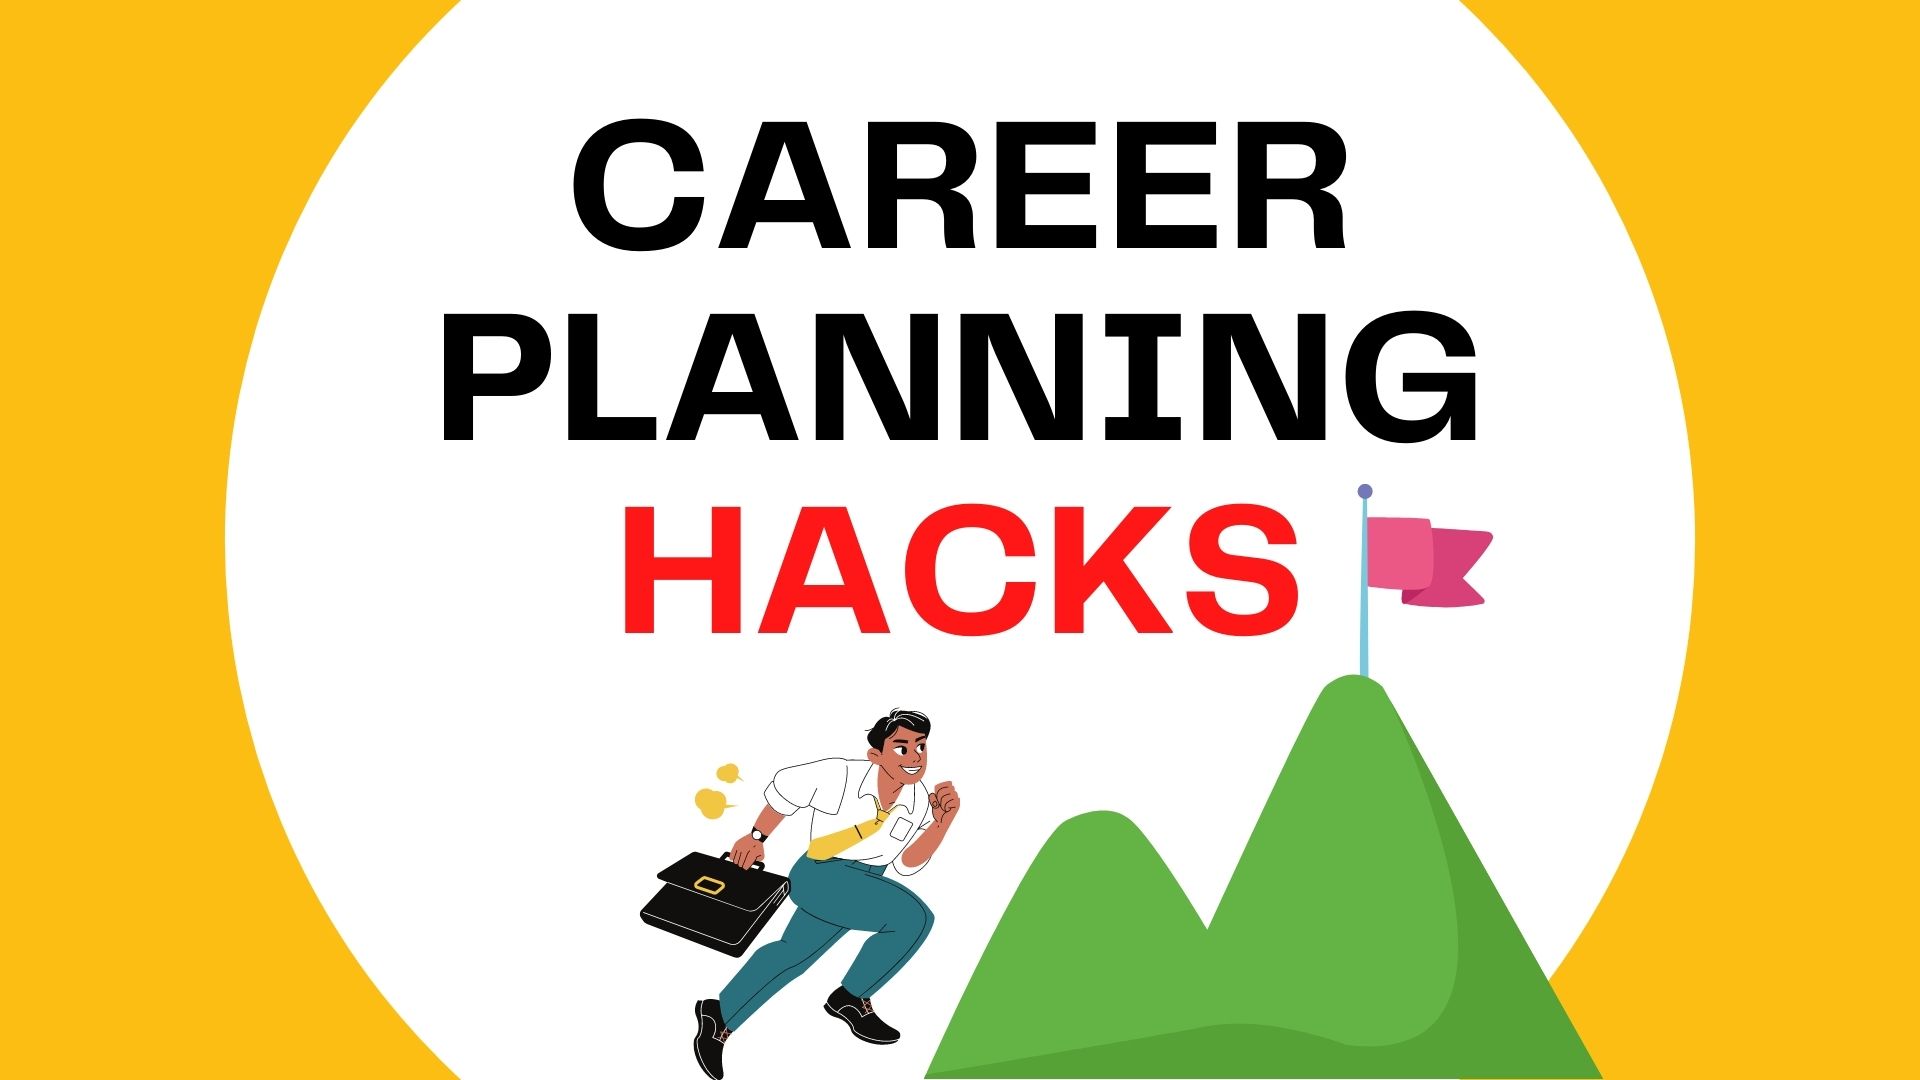 Career Planning Hacks Course Image GoEdu